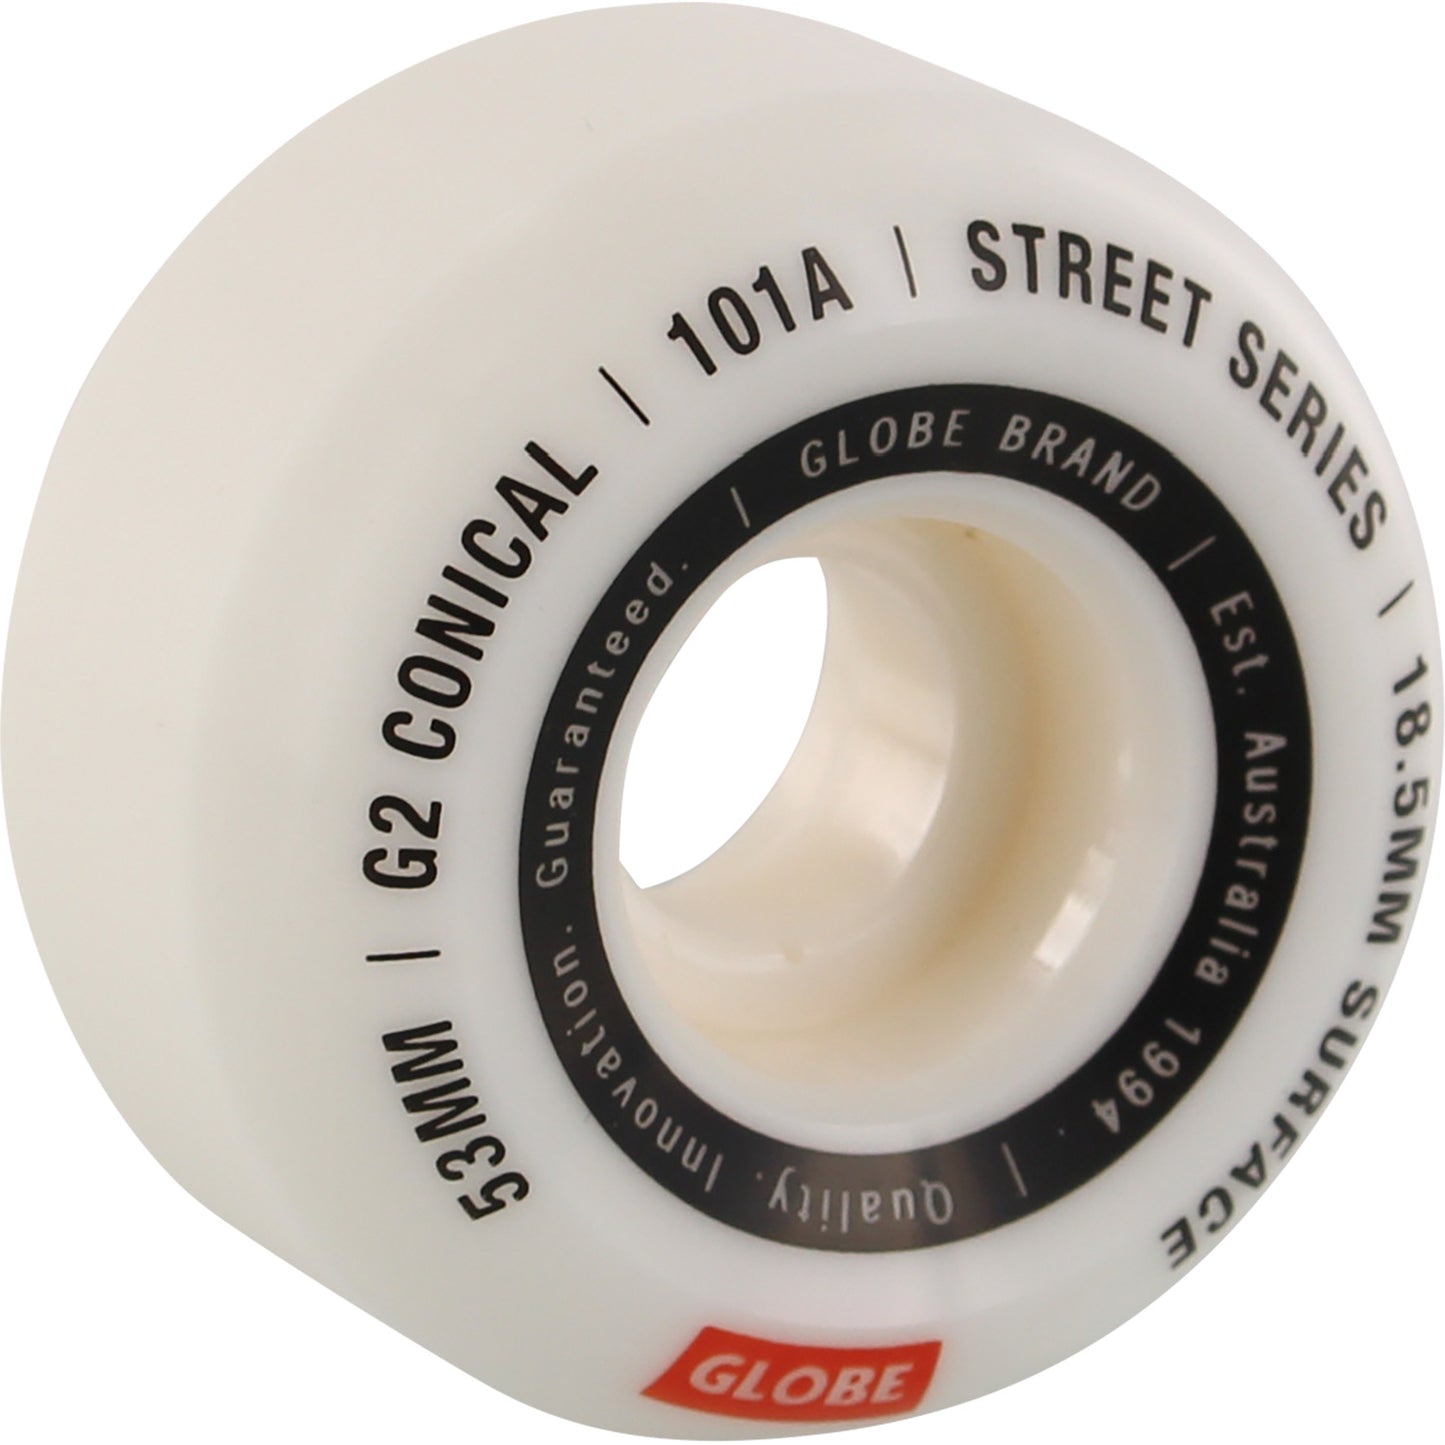 Globe G2 Conical Street Wheel 101a Skateboard Wheels - White Skate Wheels